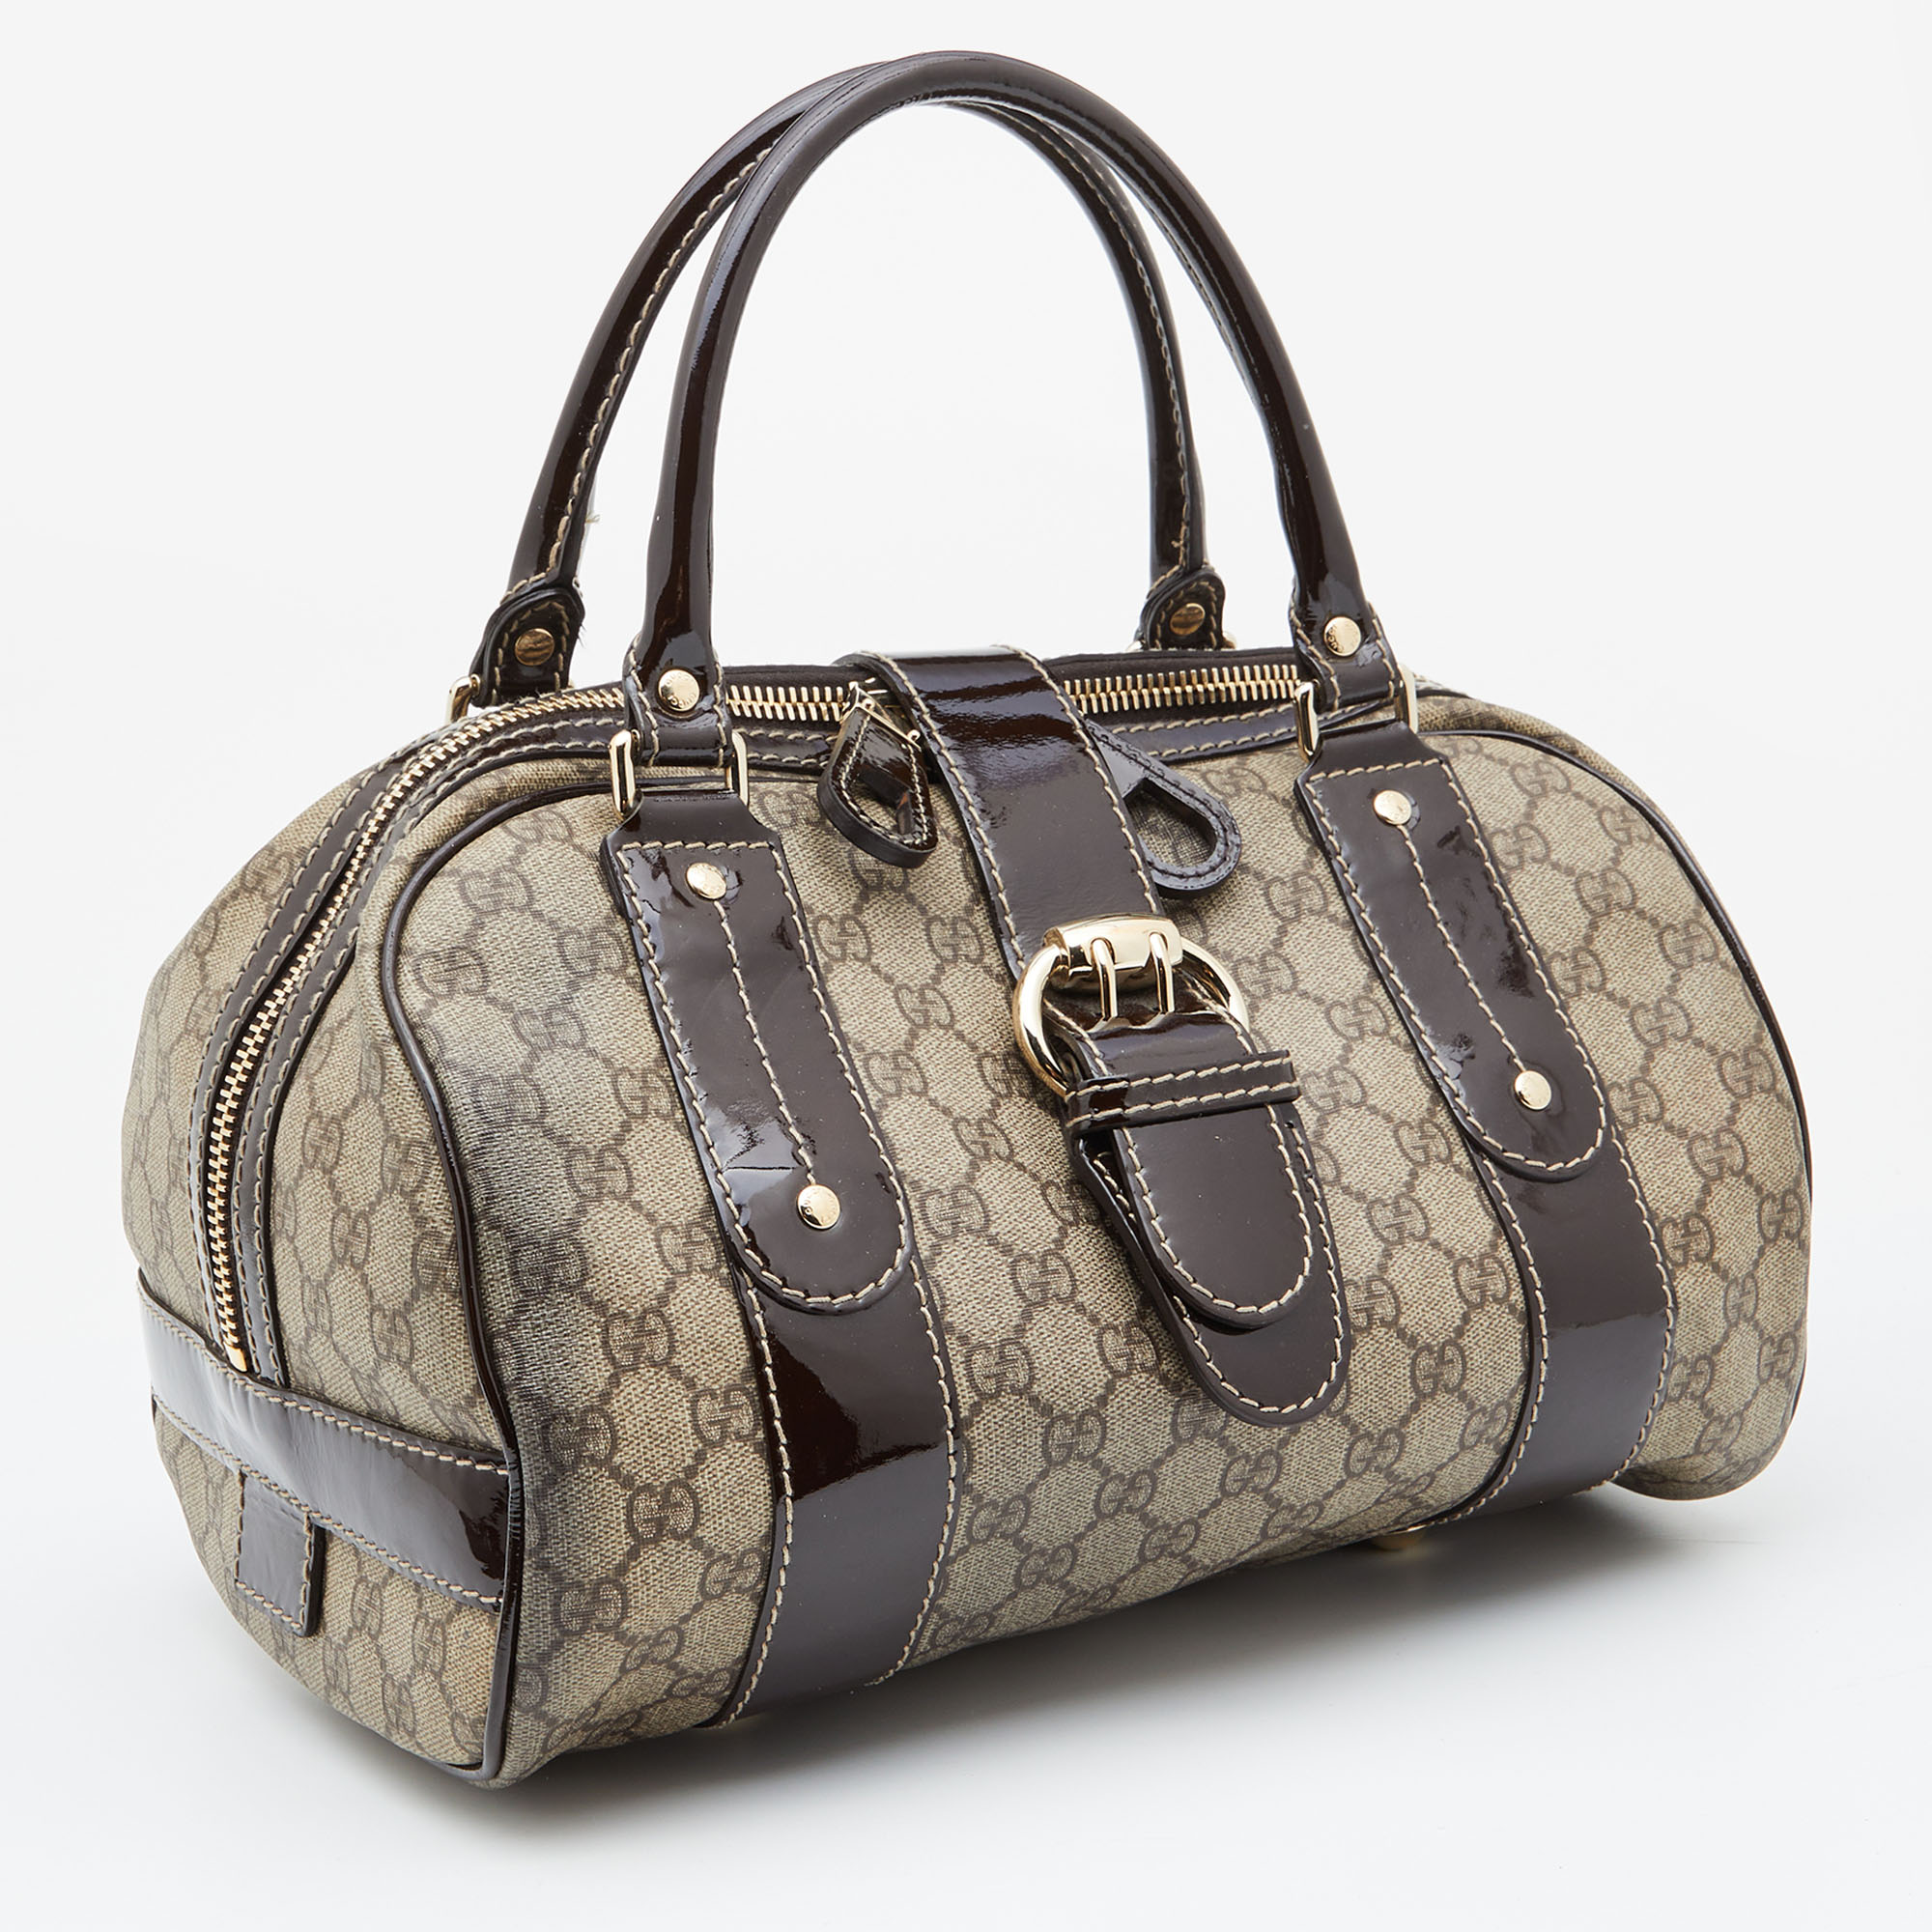 Gucci Beige/Brown GG Supreme Canvas And Patent Leather Boston Bag